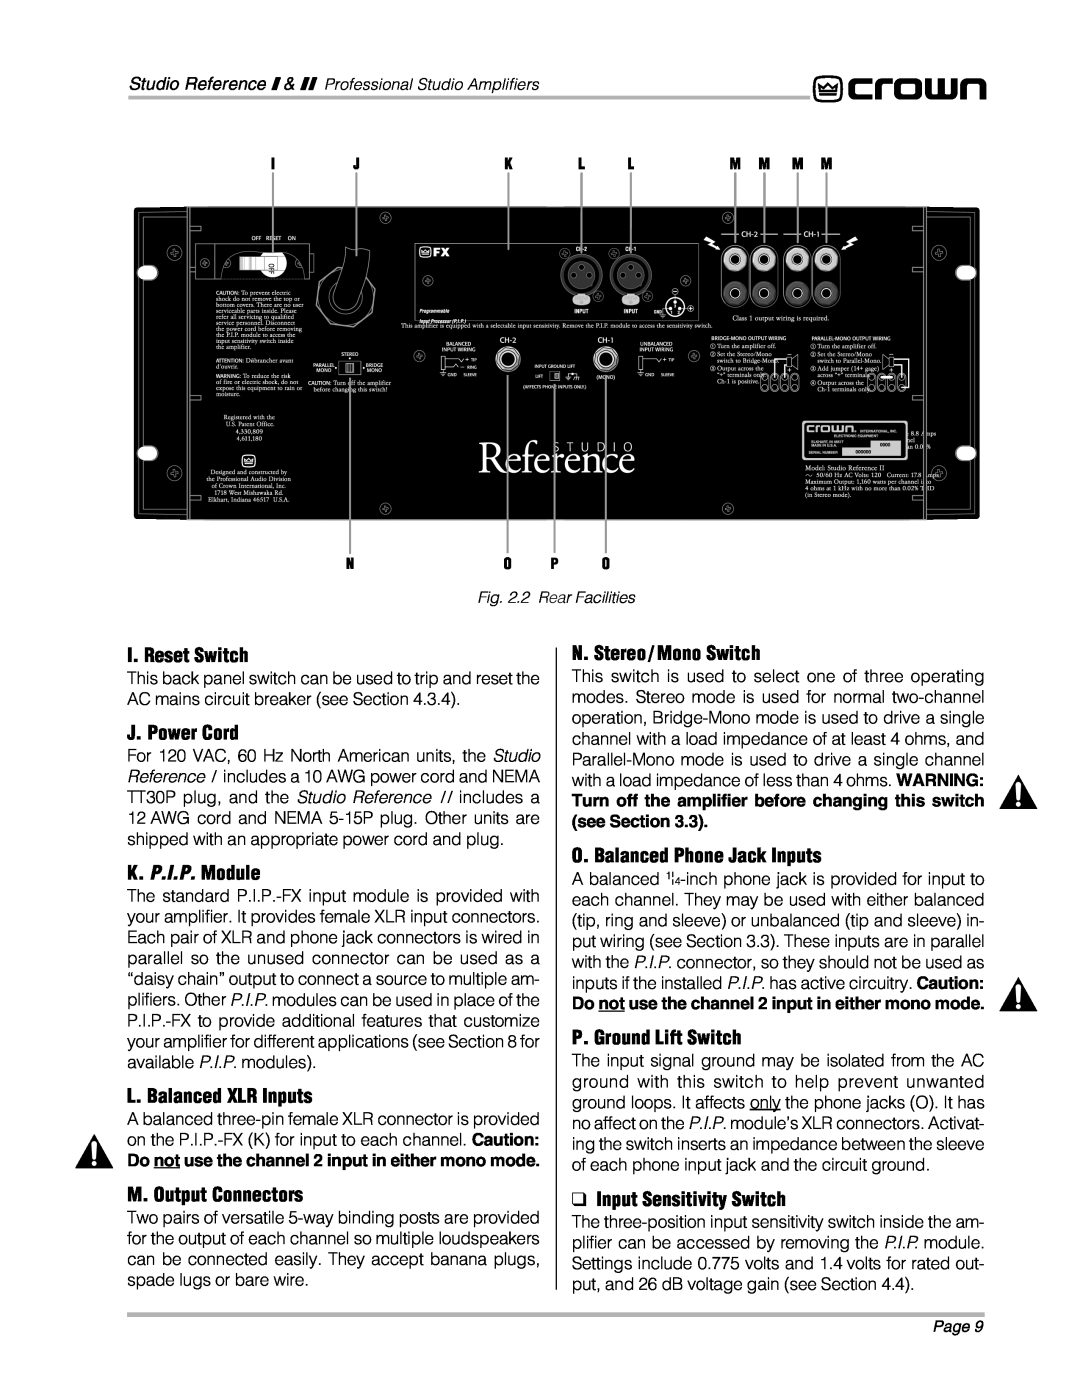 Crown Audio STUDIO AMPLIFIER owner manual I. Reset Switch, J. Power Cord, K. P.I.P. Module, L. Balanced XLR Inputs 